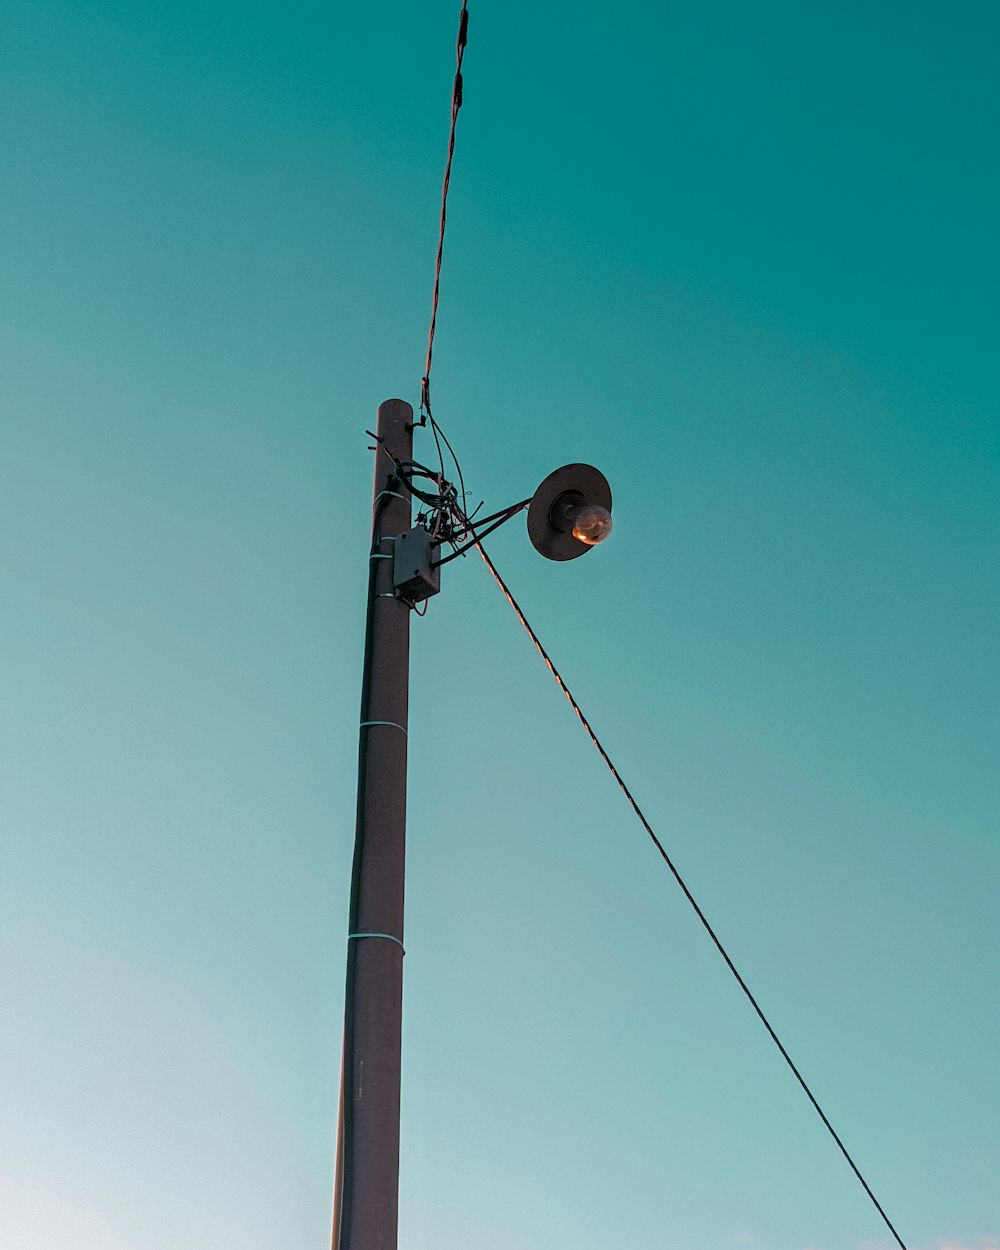 black street light under blue sky during daytime